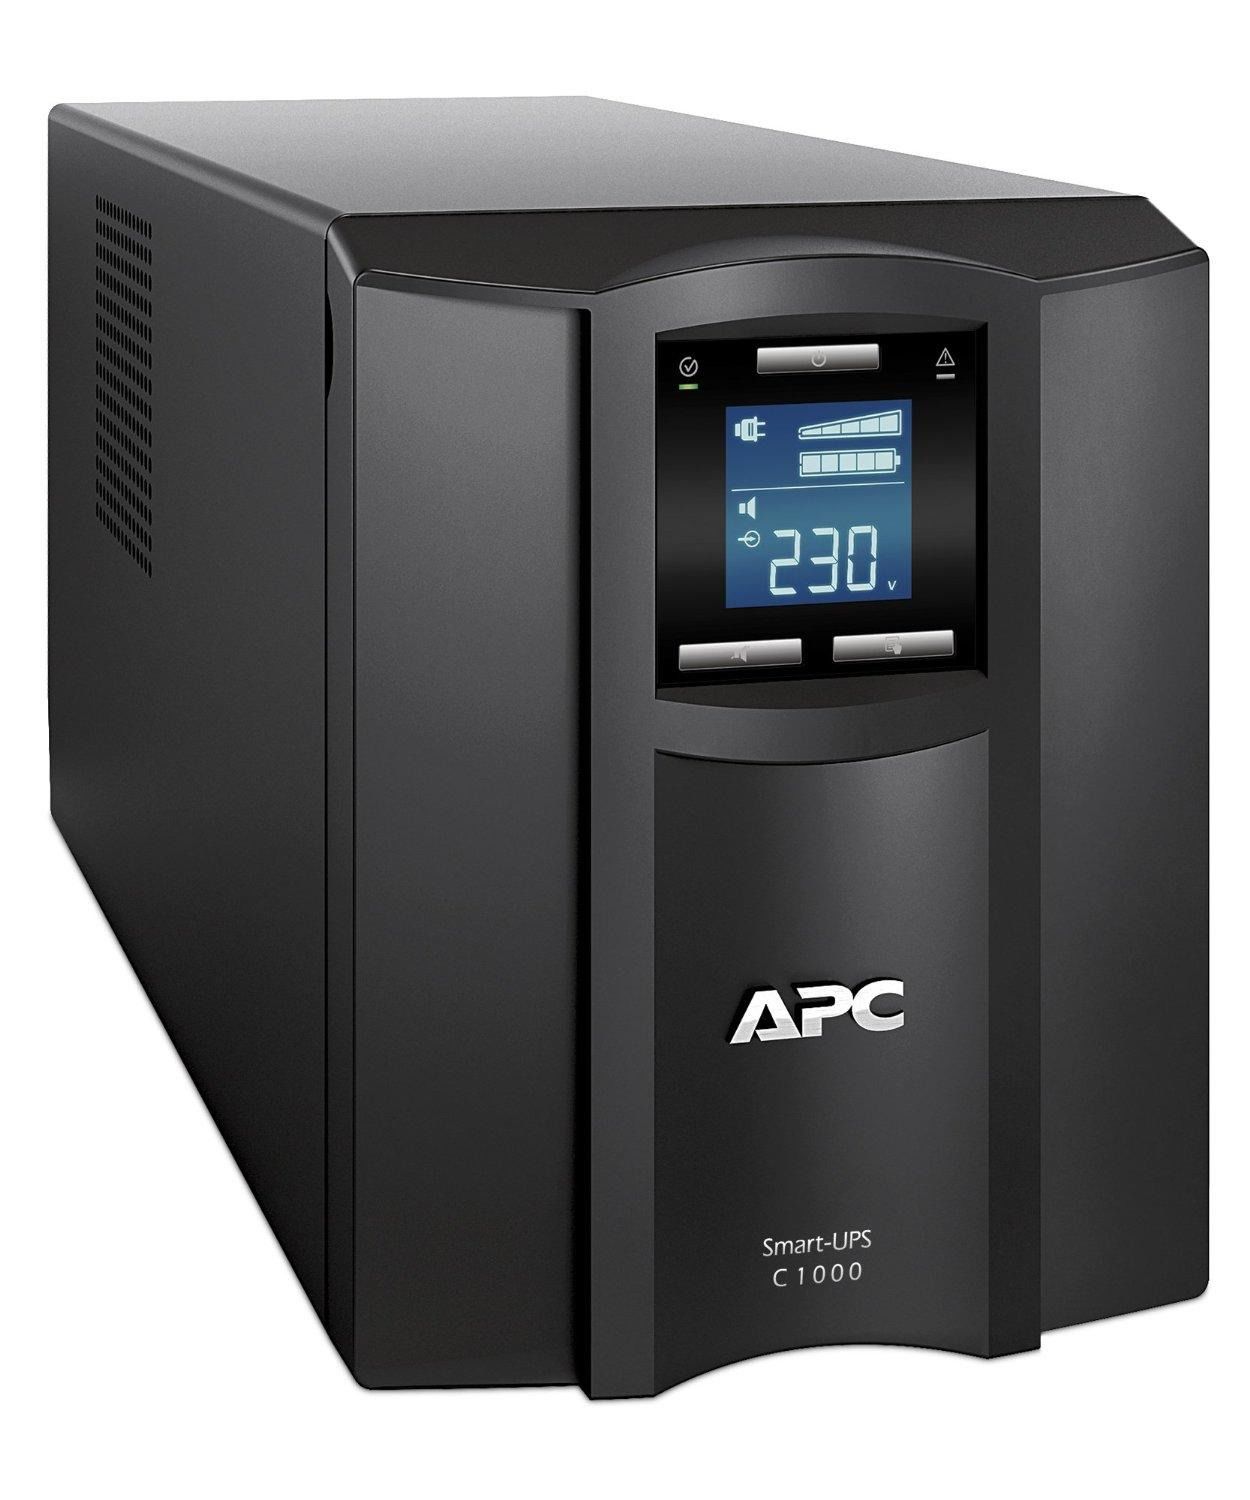 ИБП APC Smart-UPS SMC1500I